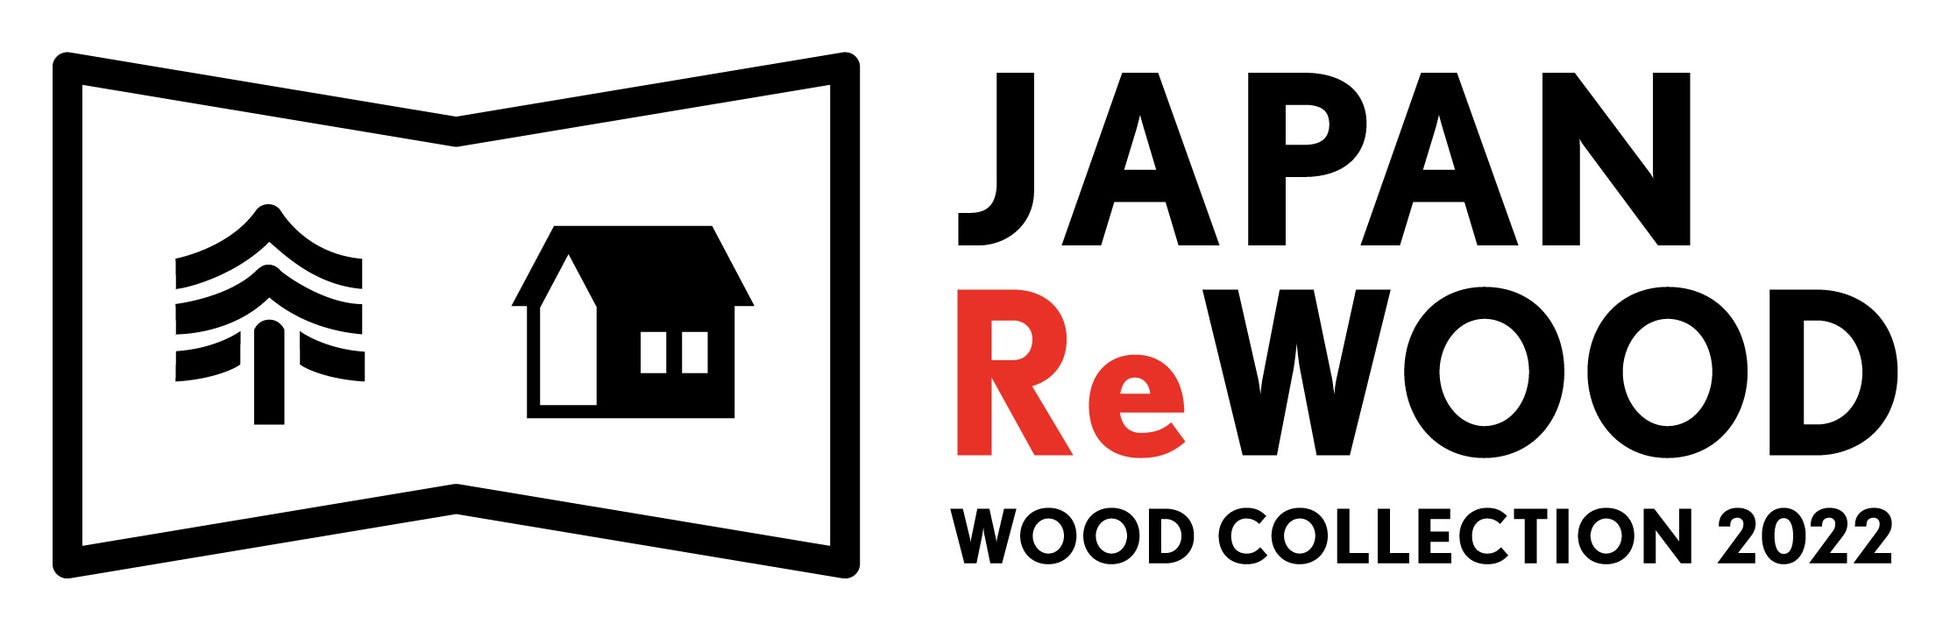 WOOD COLLECTION 2022『JAPAN ReWOOD』　開催のサブ画像4